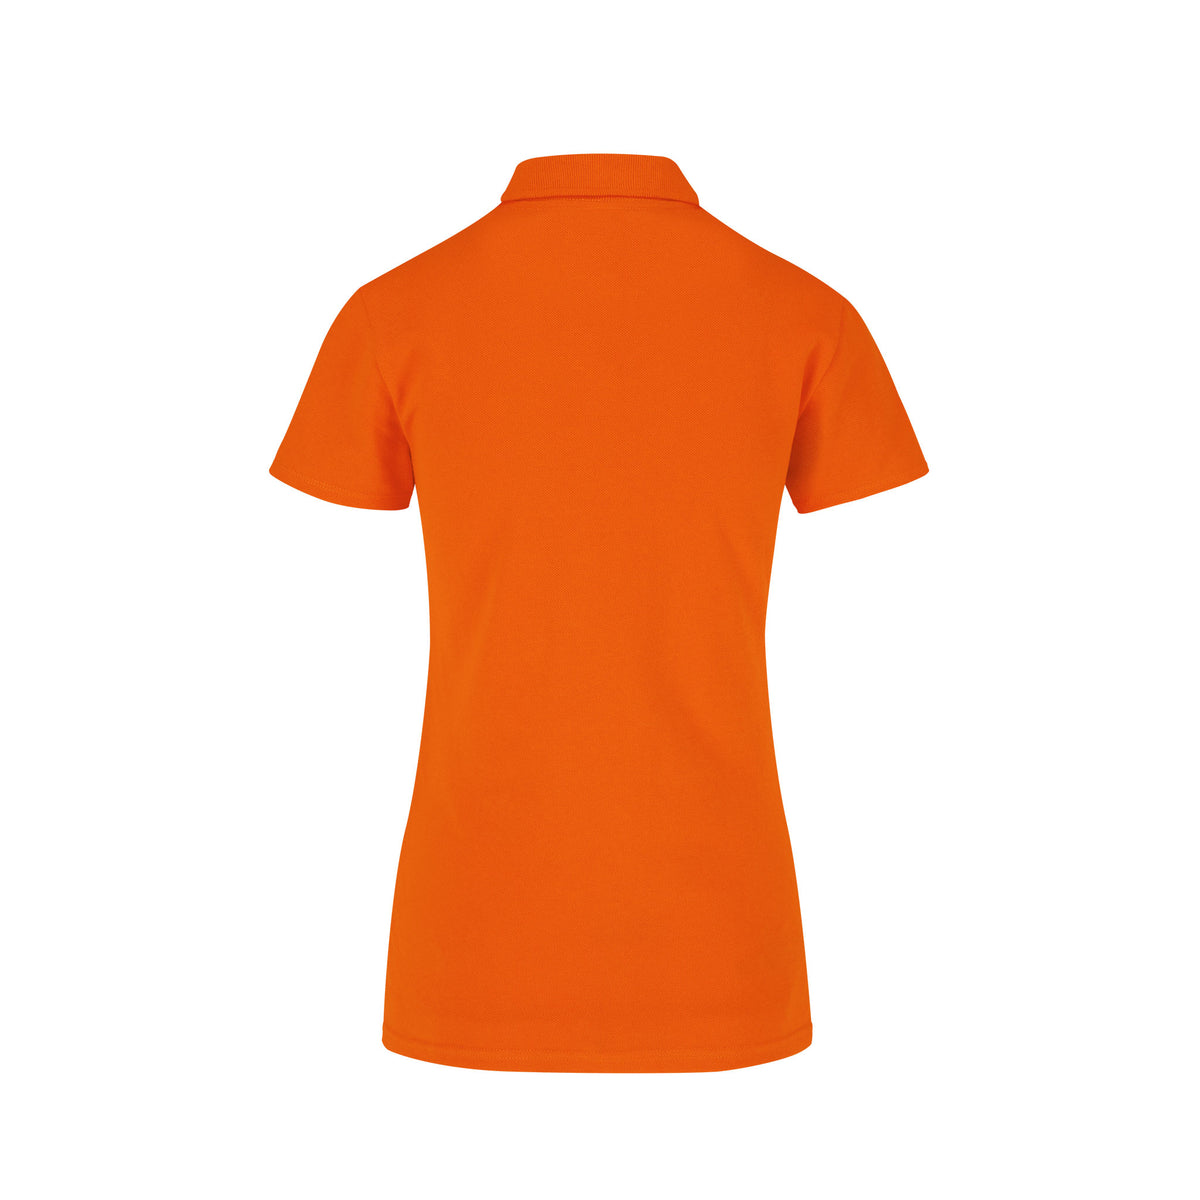 Women’s Silhouette Sport Shirt (Orange) – Yazbek USA Mint